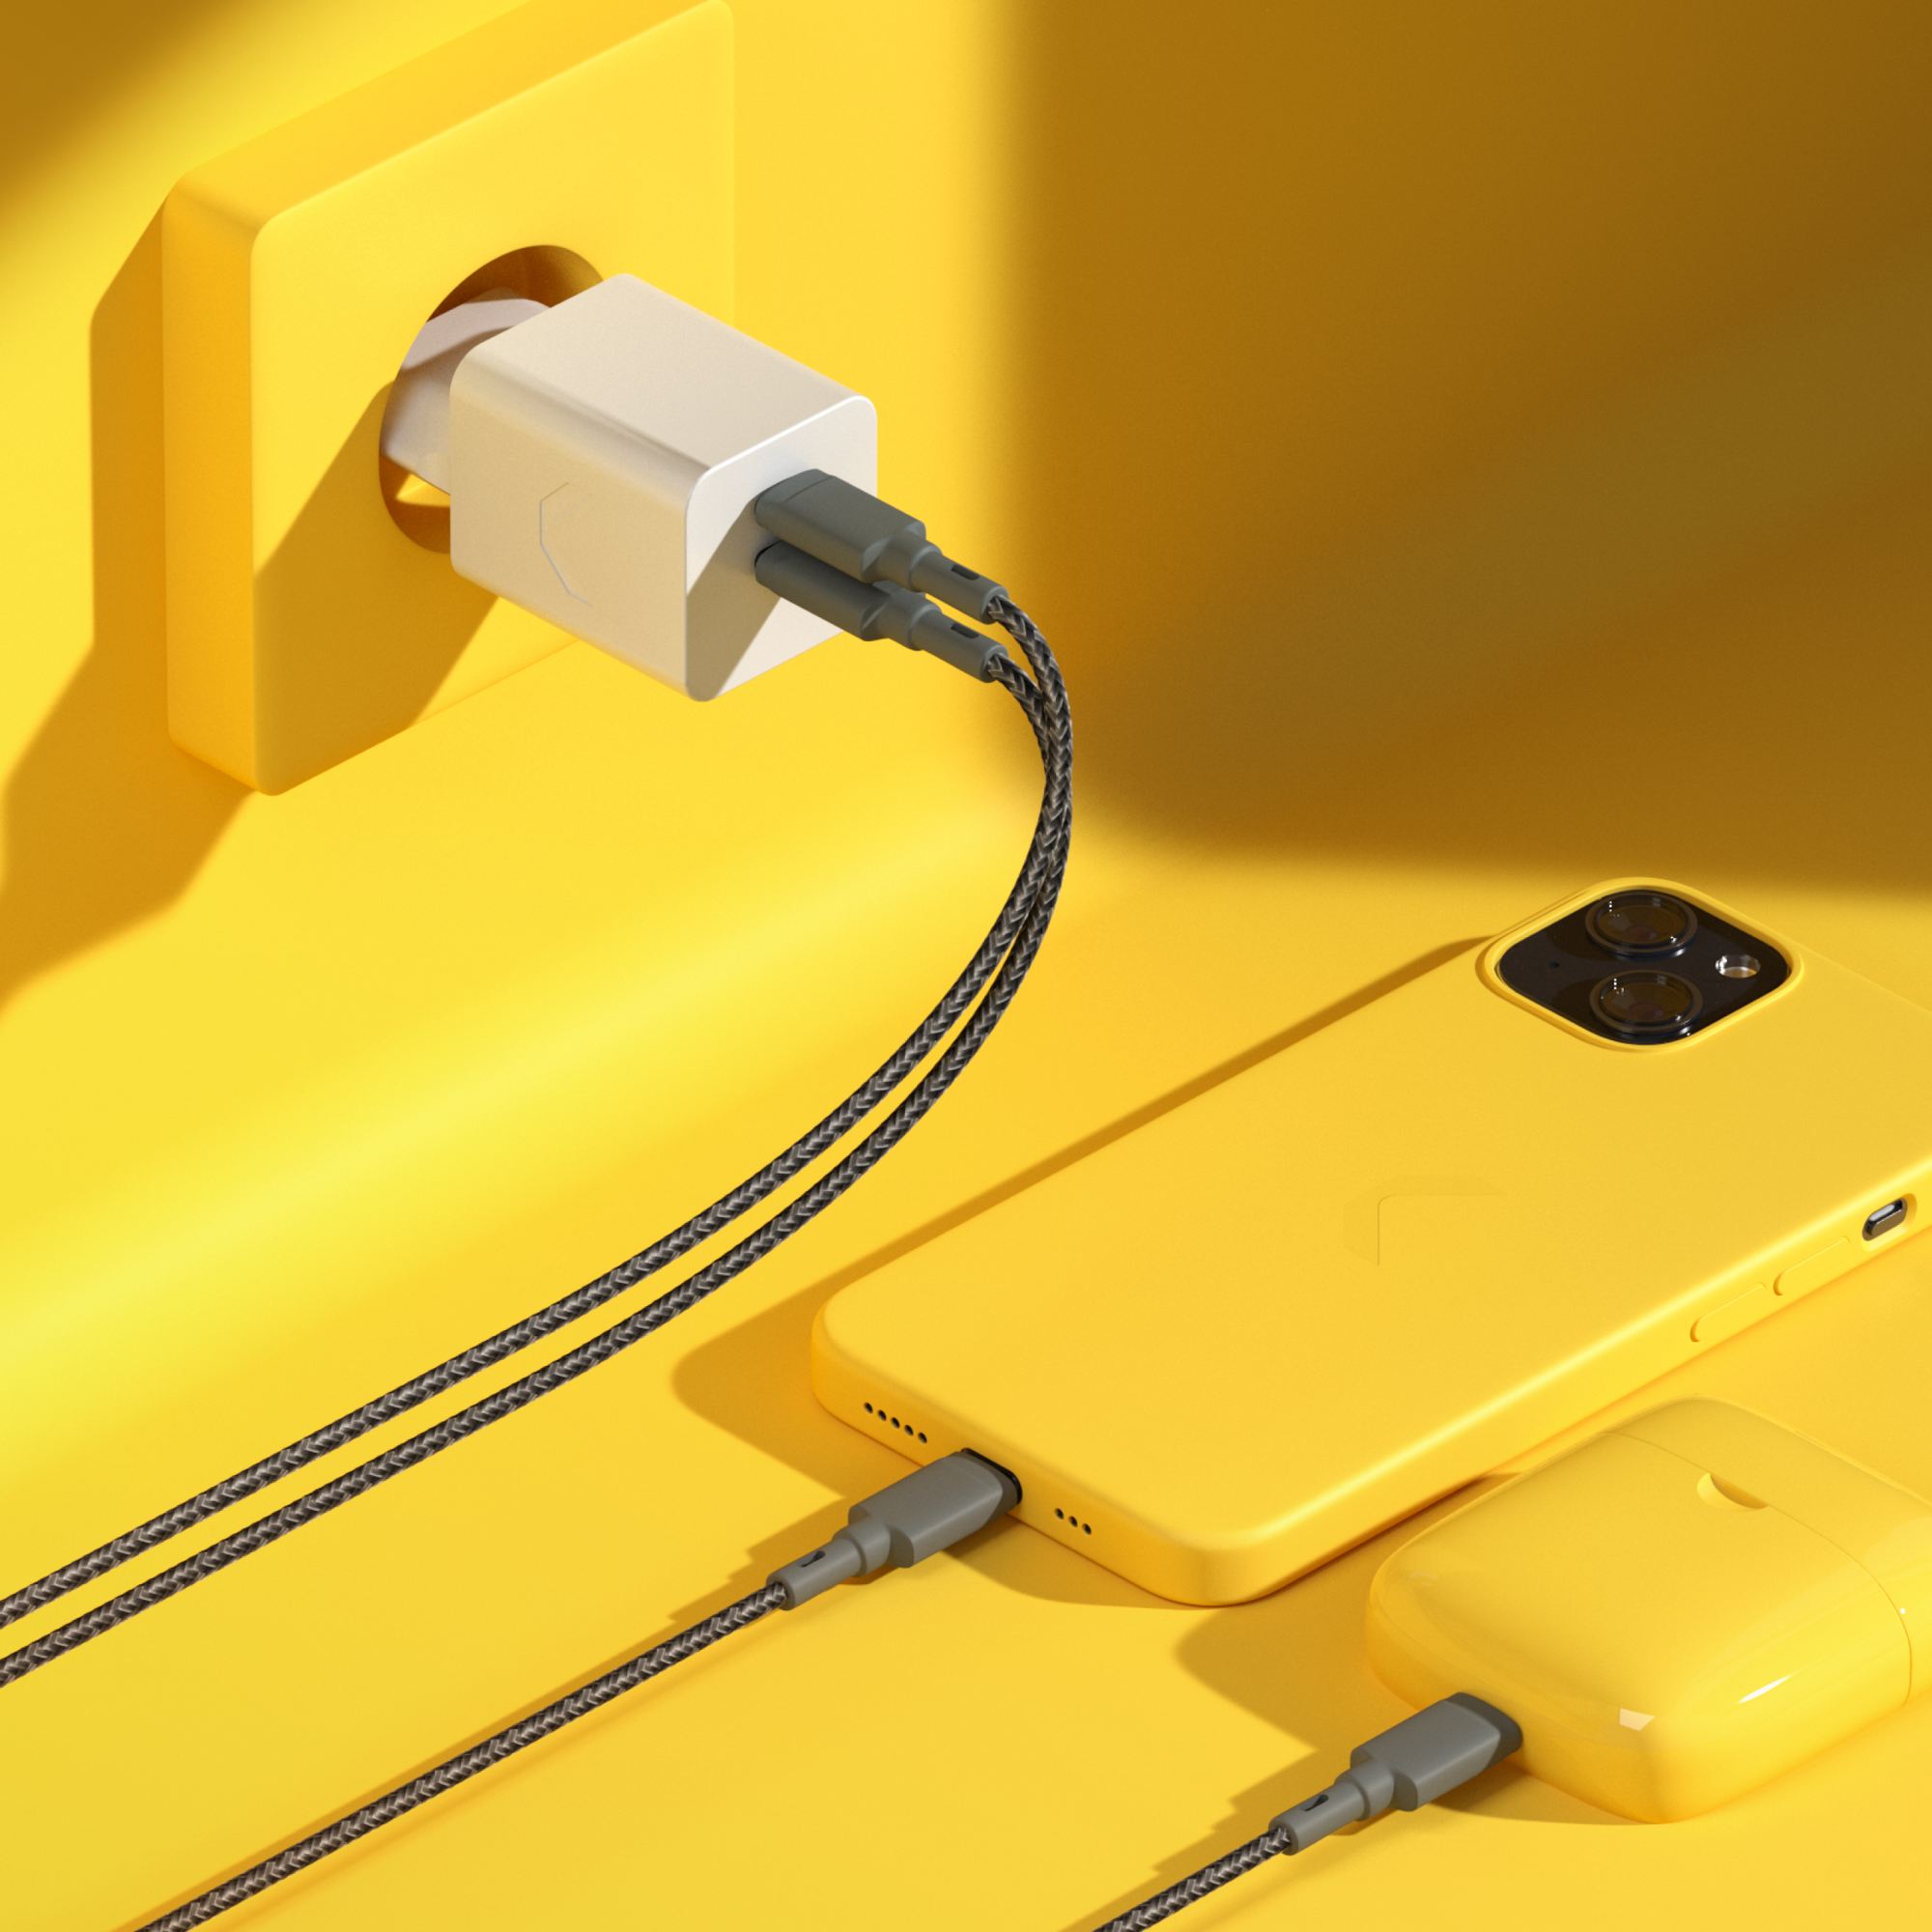 Кабель COMMO Range Cable USB A - Lightning MFI, 1.2 м, Graphite